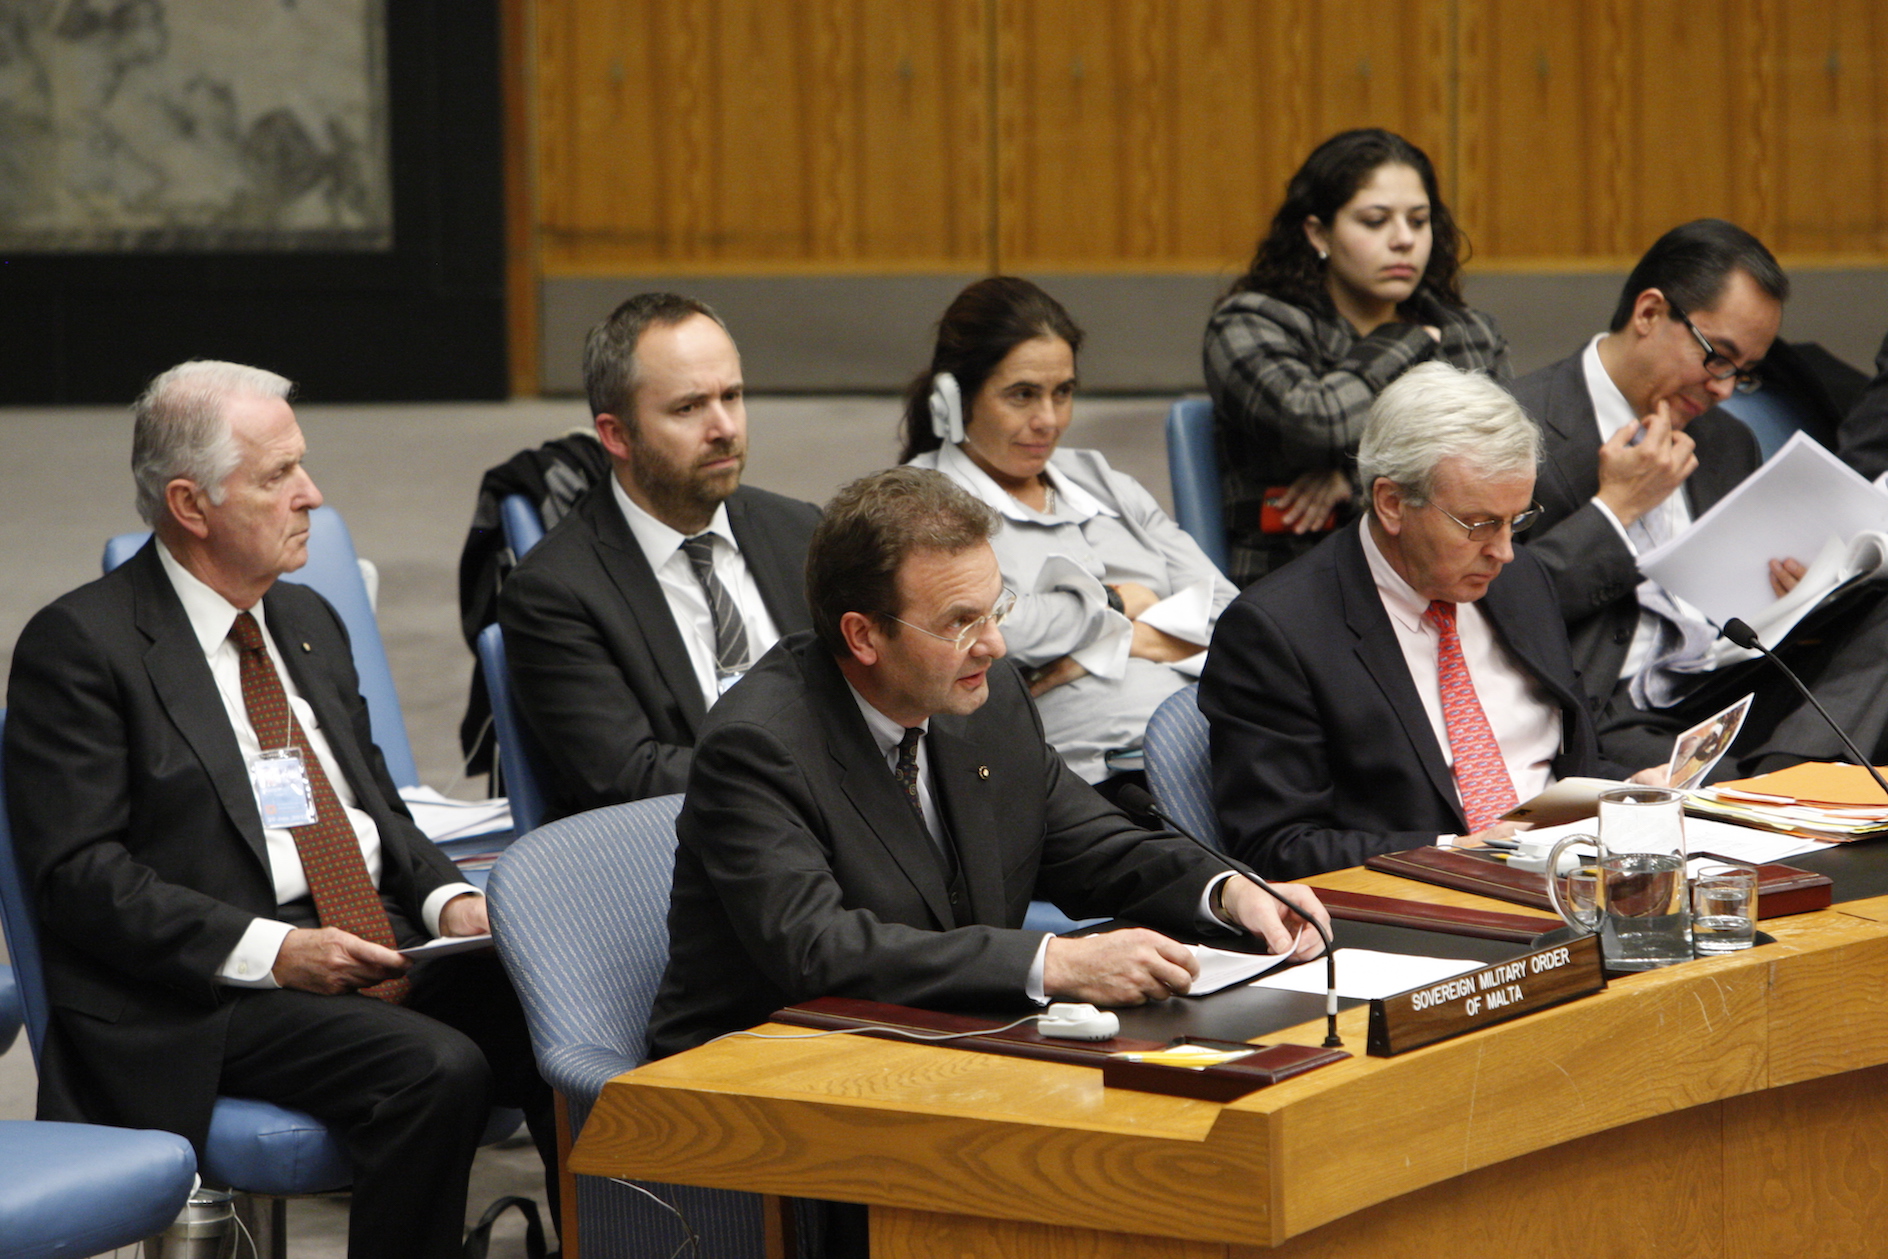 Stop the massacre of civilians’: the Order’s heartfelt appeal to the UN security council